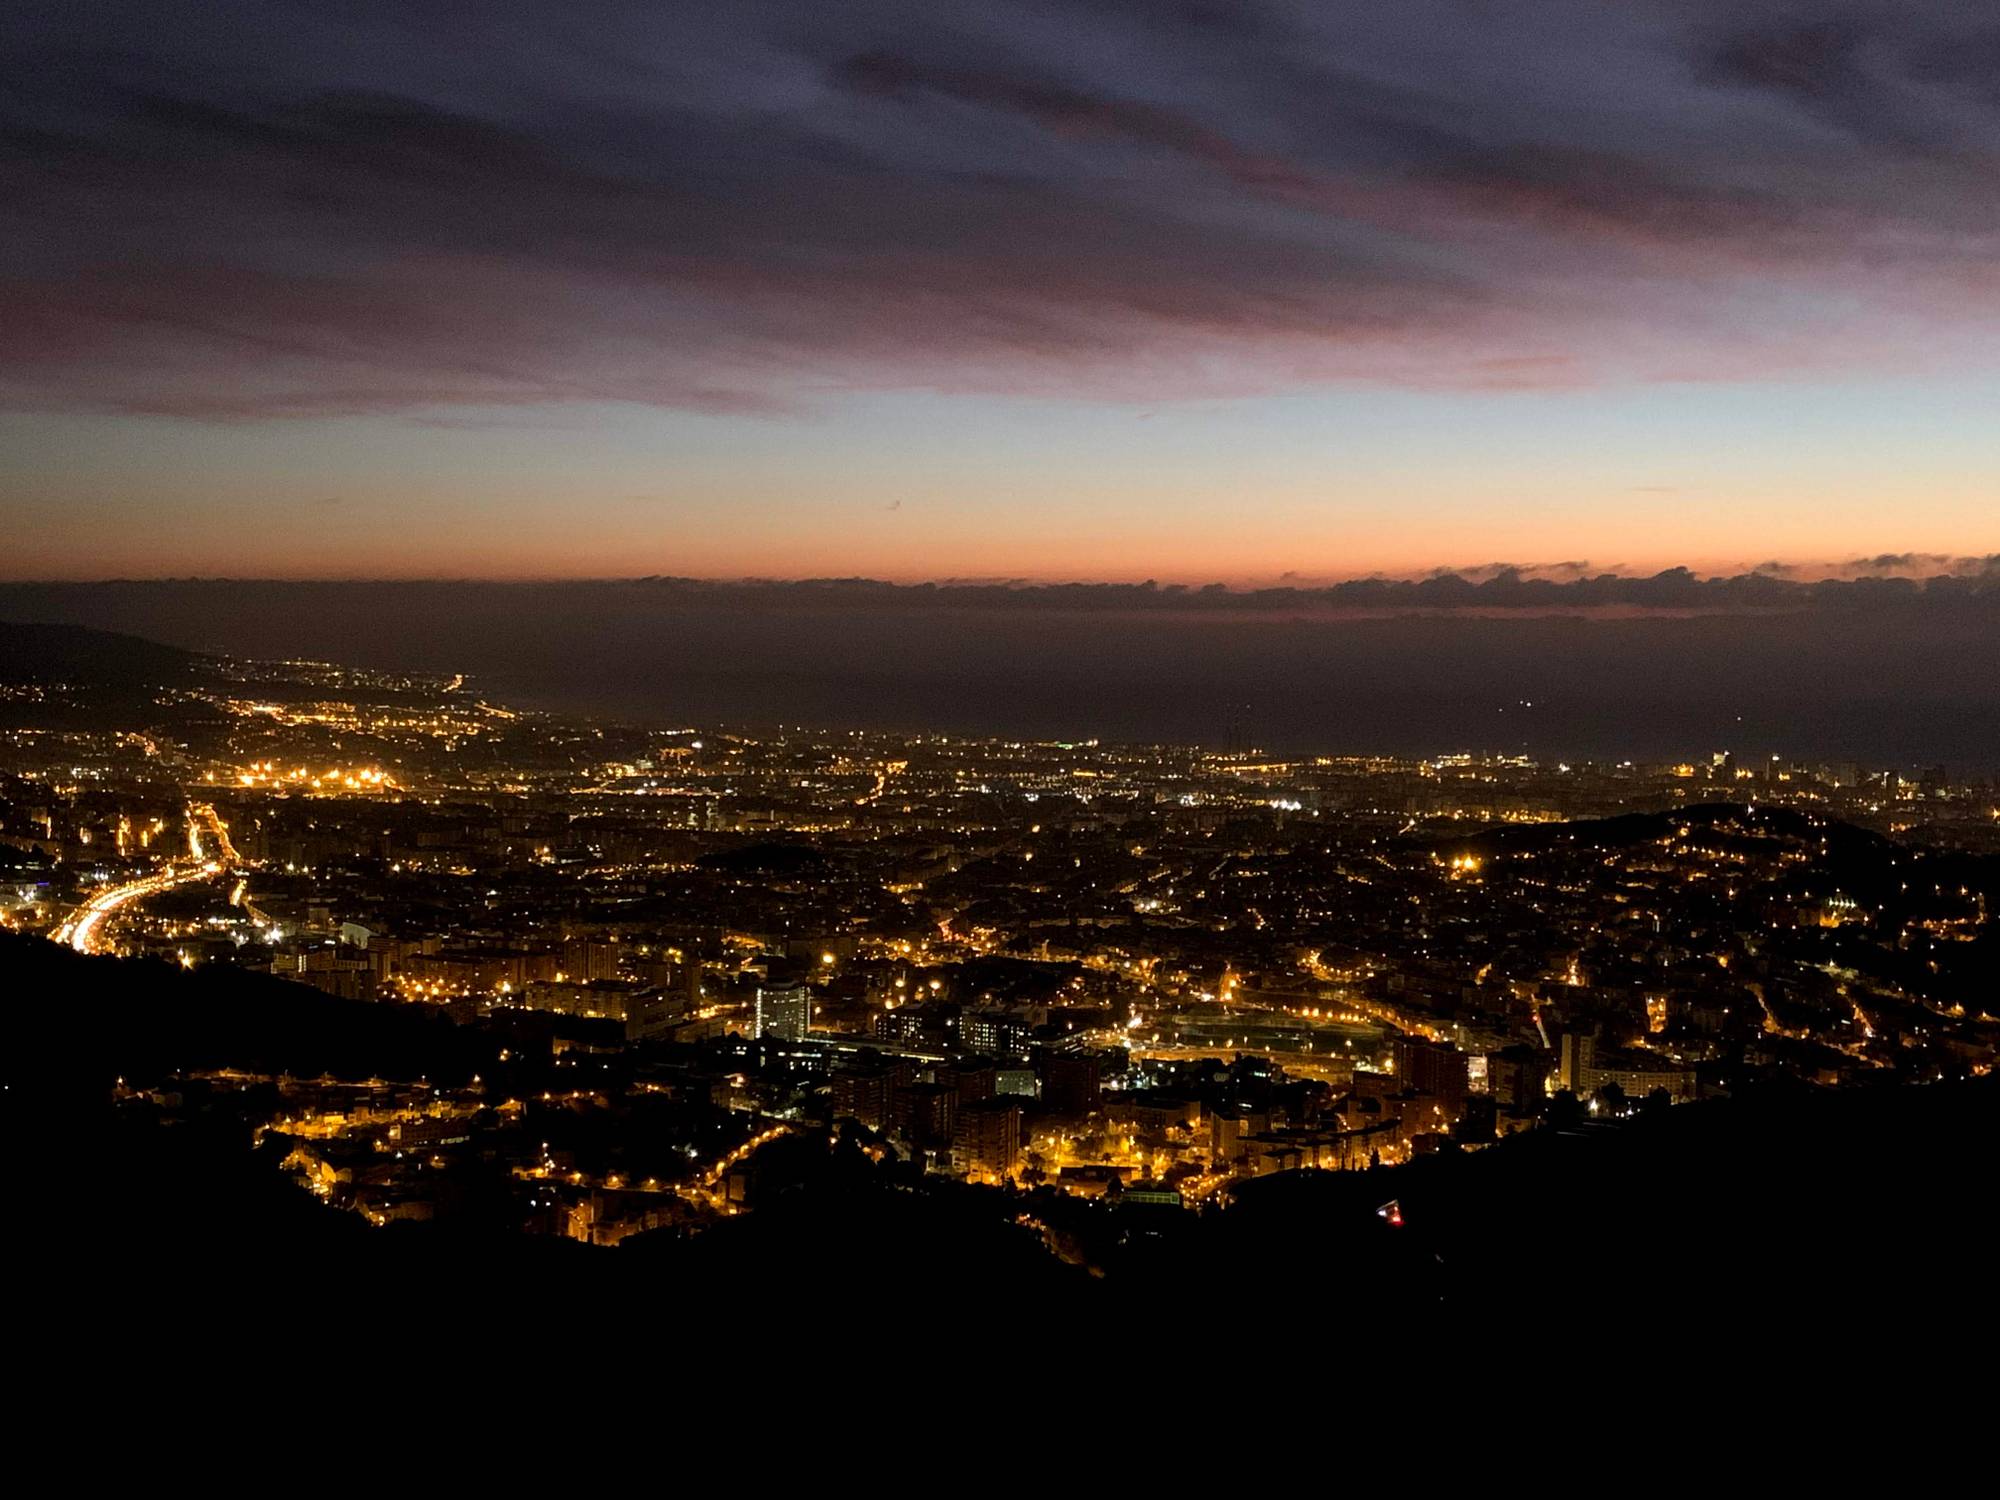 Barcelona at sunrise viewed from Tibidabo, Spain